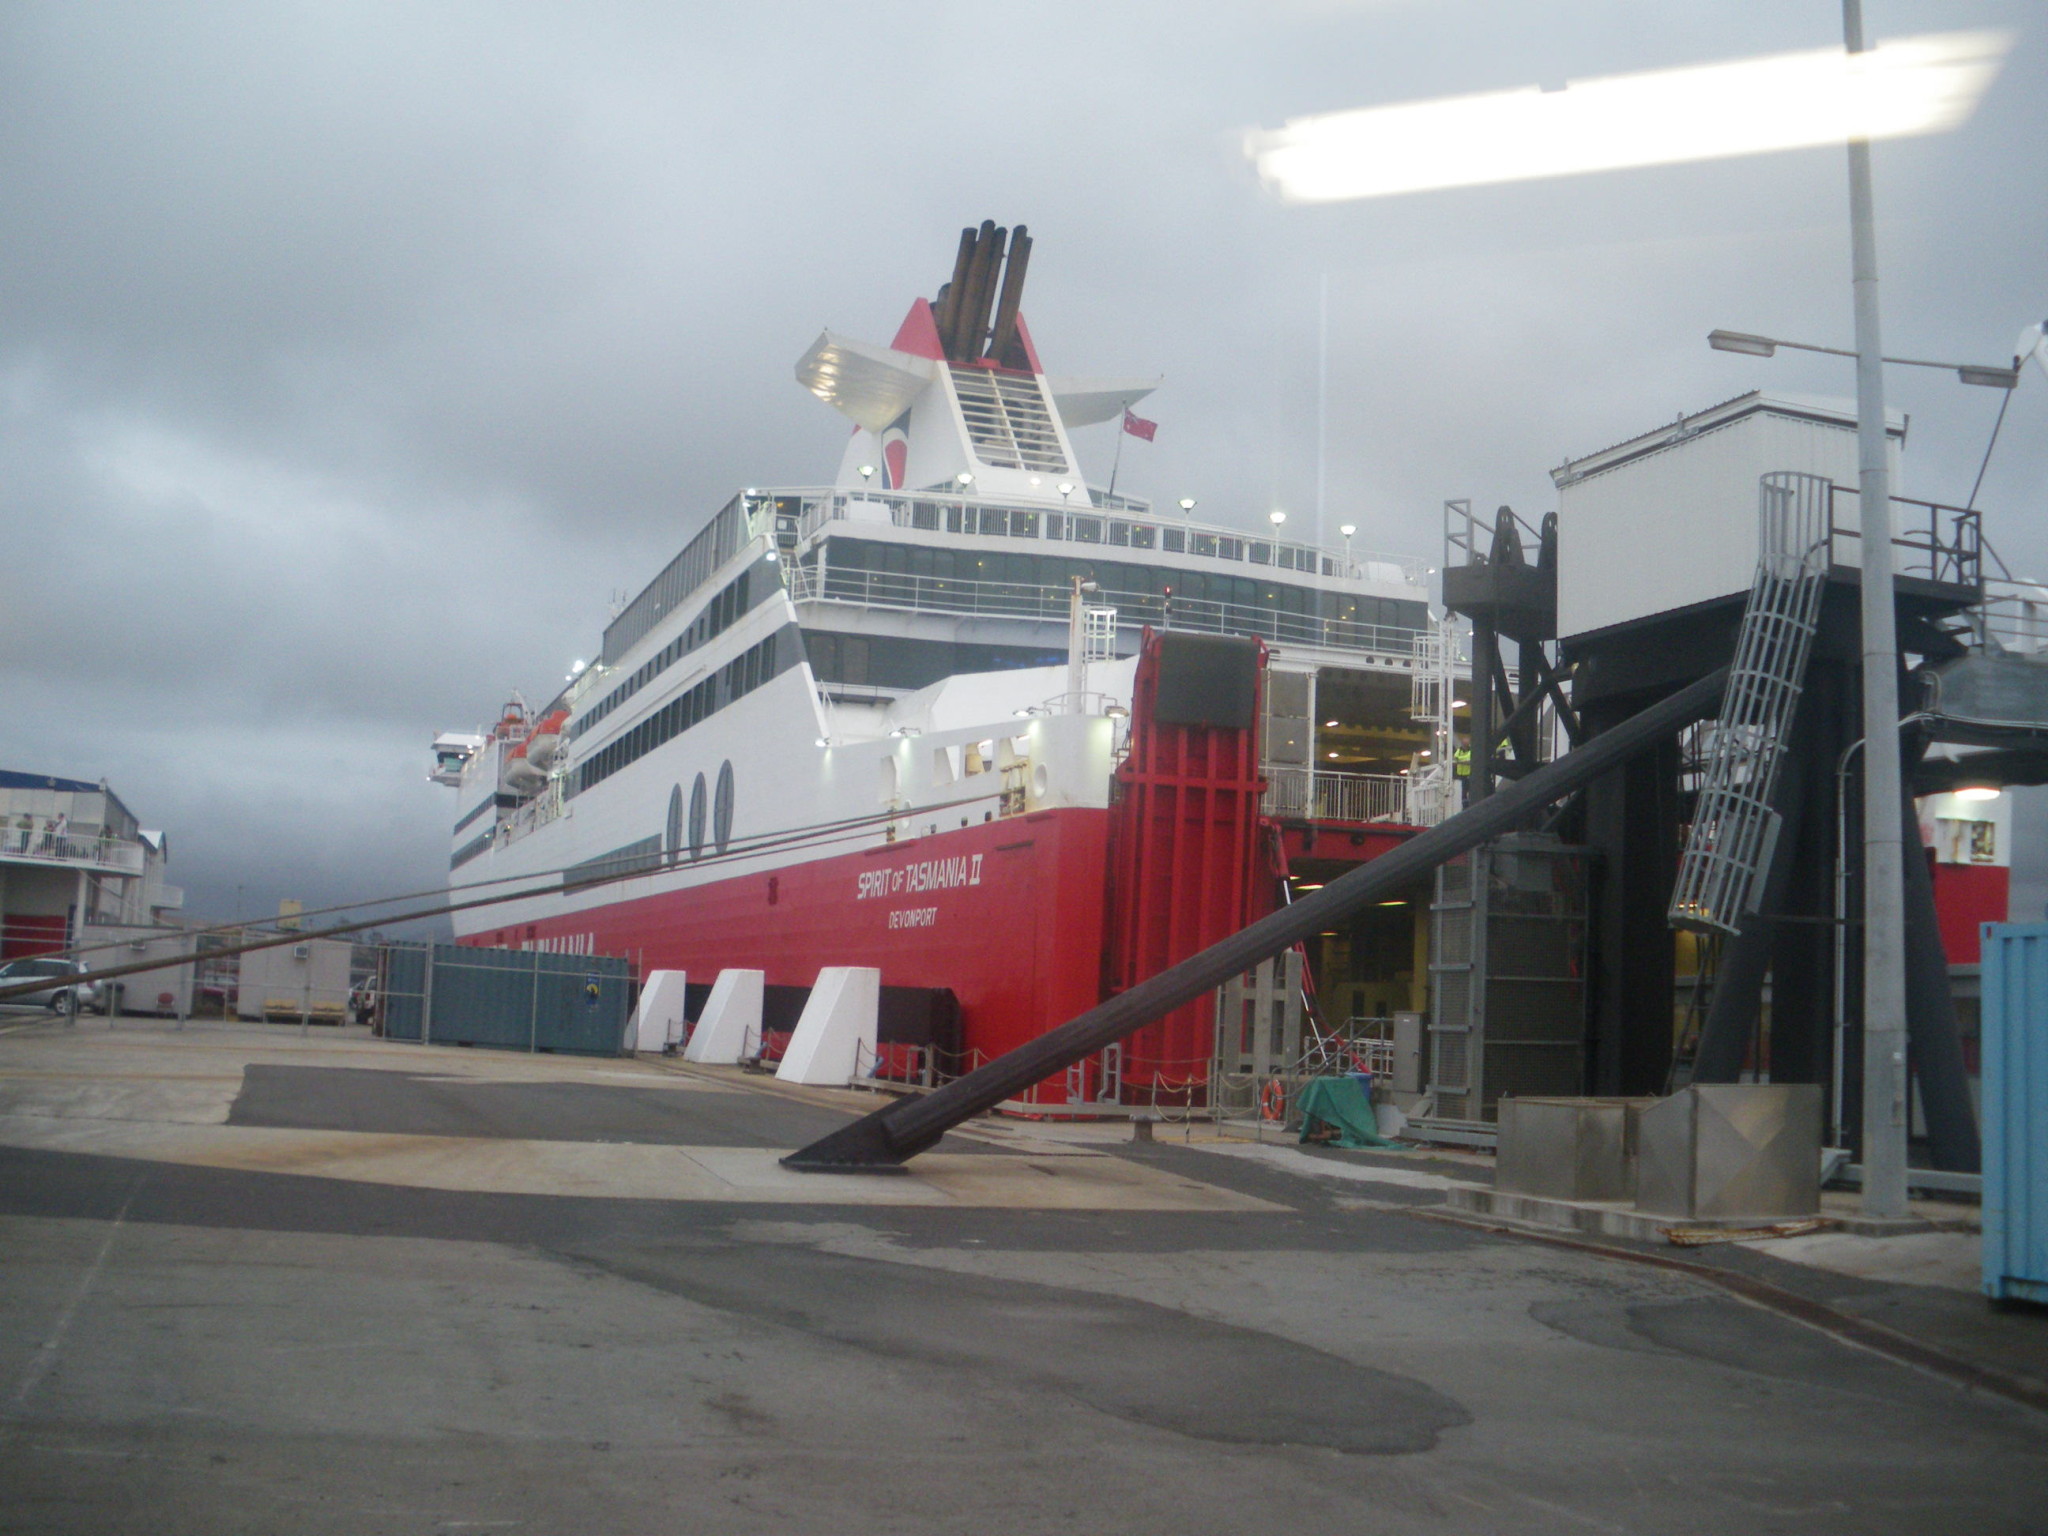 Spirit of Tasmania ferry 2010